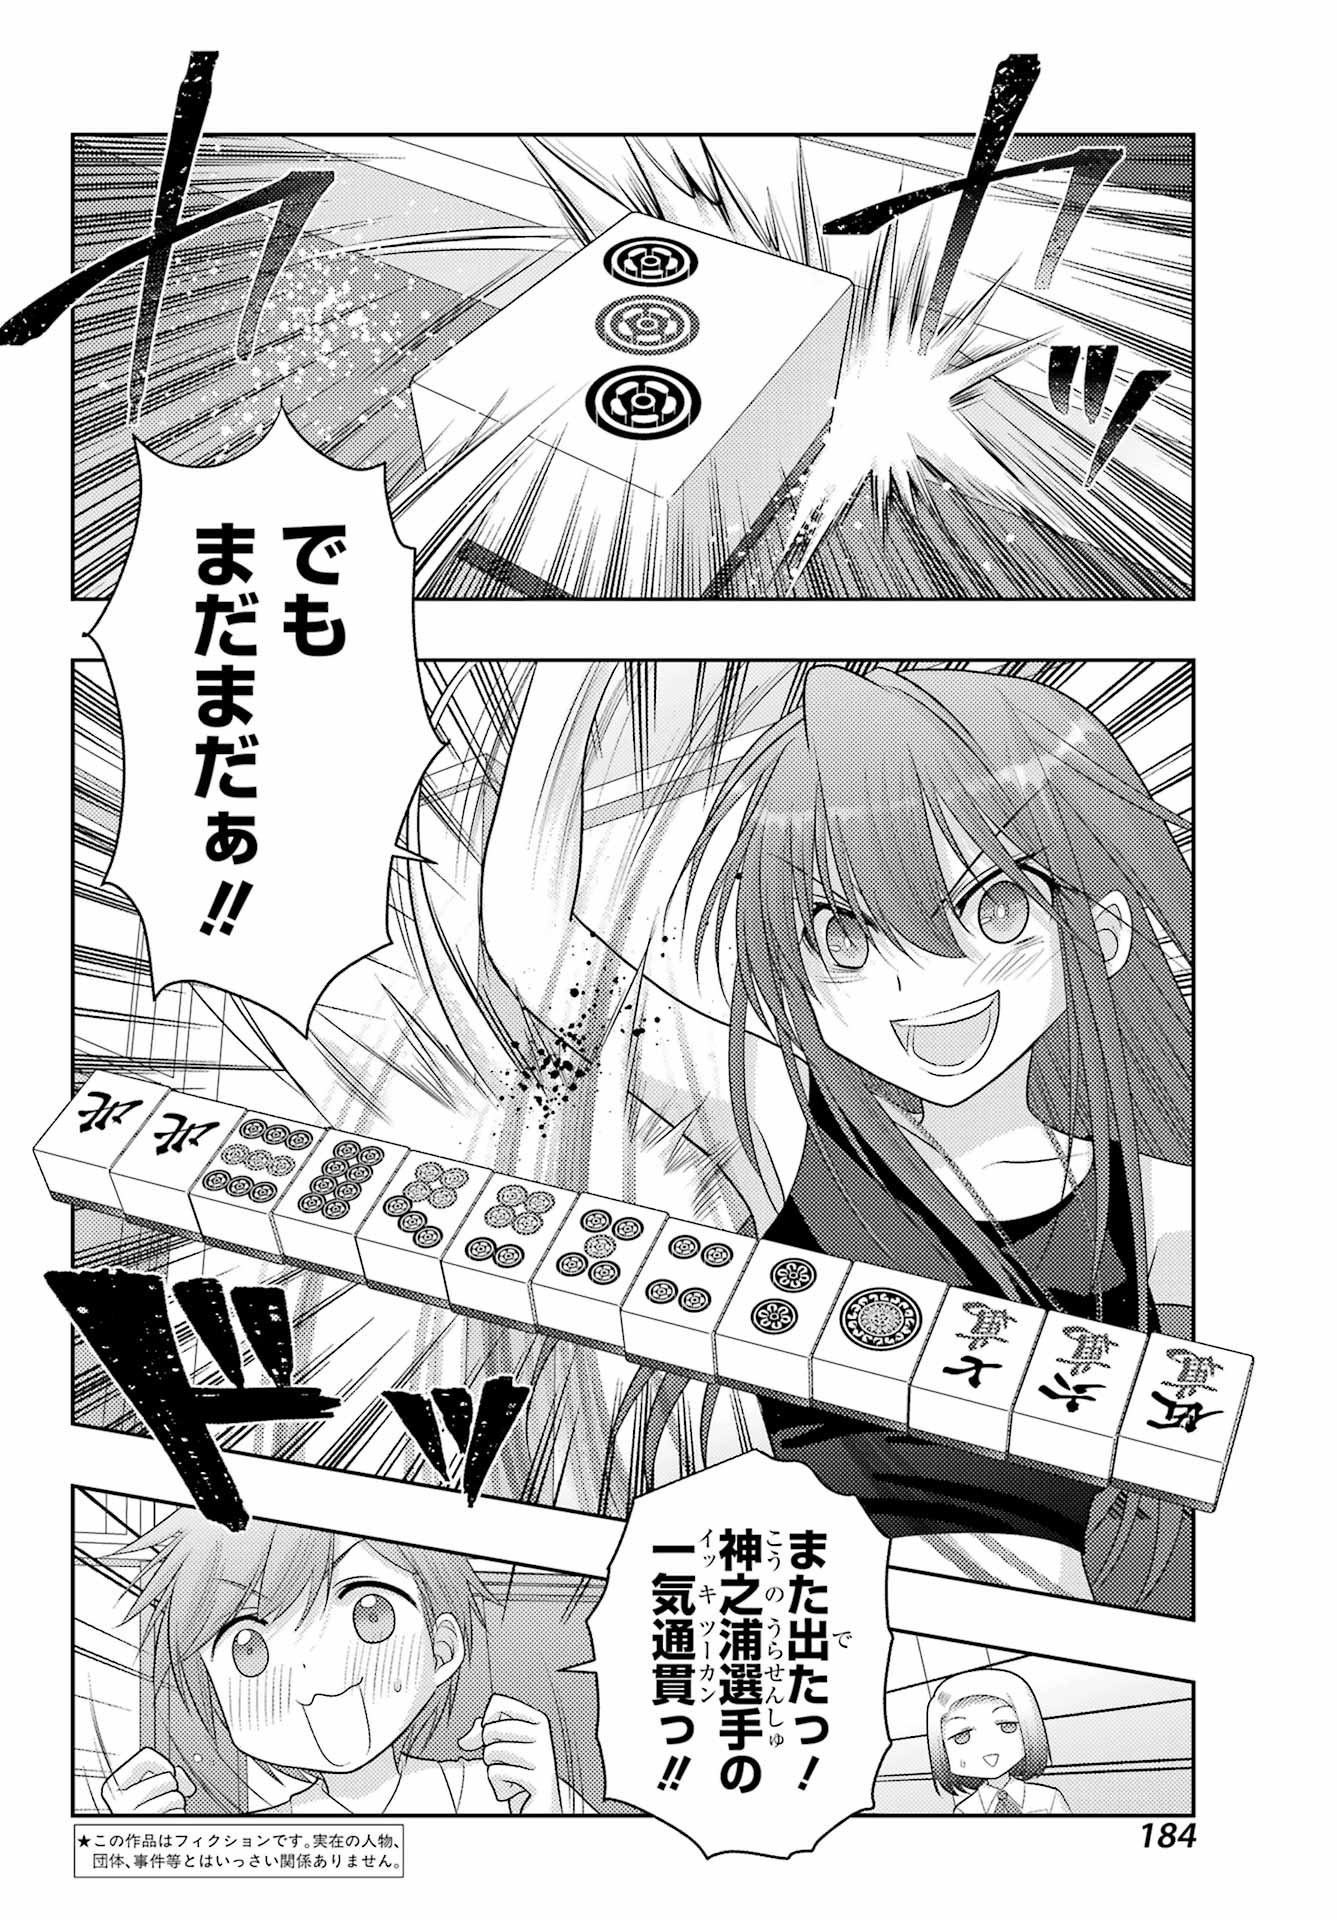 Shinohayu - The Dawn of Age Manga - Chapter 106 - Page 2